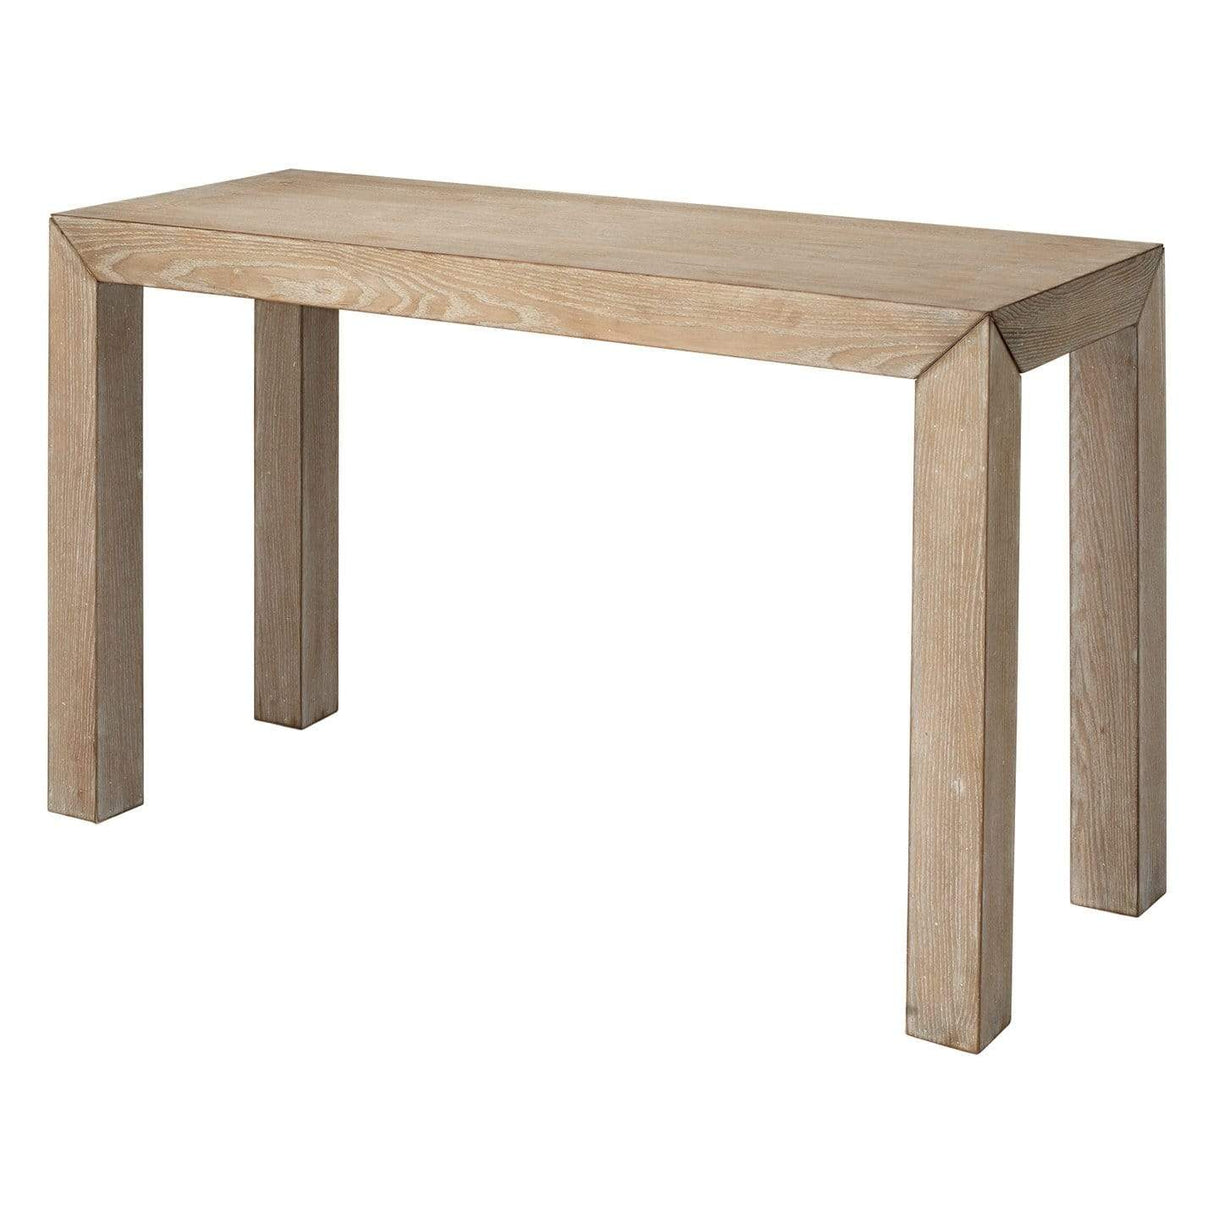 BLU Home Parson Console Table - Natural Oak Veneer Furniture jamie-young-LSPARSONOAK 688933029093